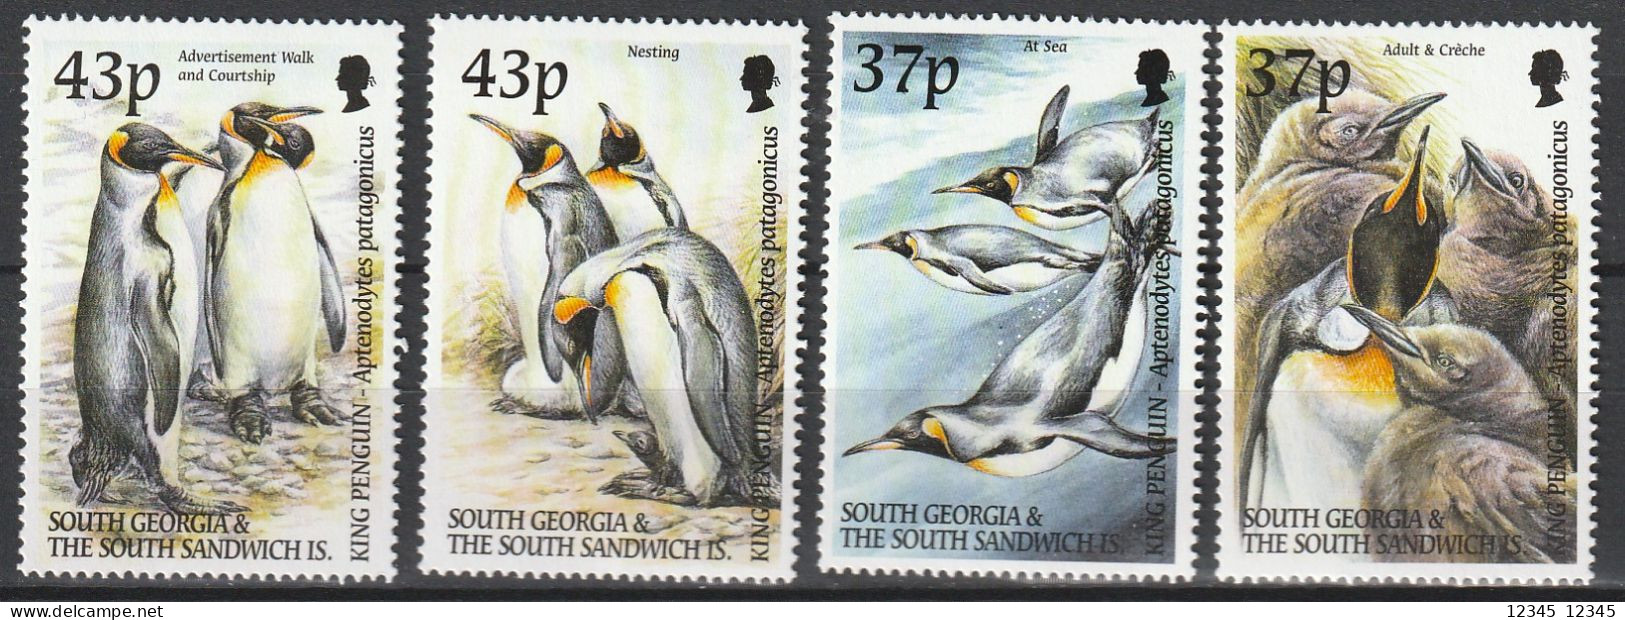 Zuid Georgië 2000, Postfris MNH, Birds, Penguin - Zuid-Georgia